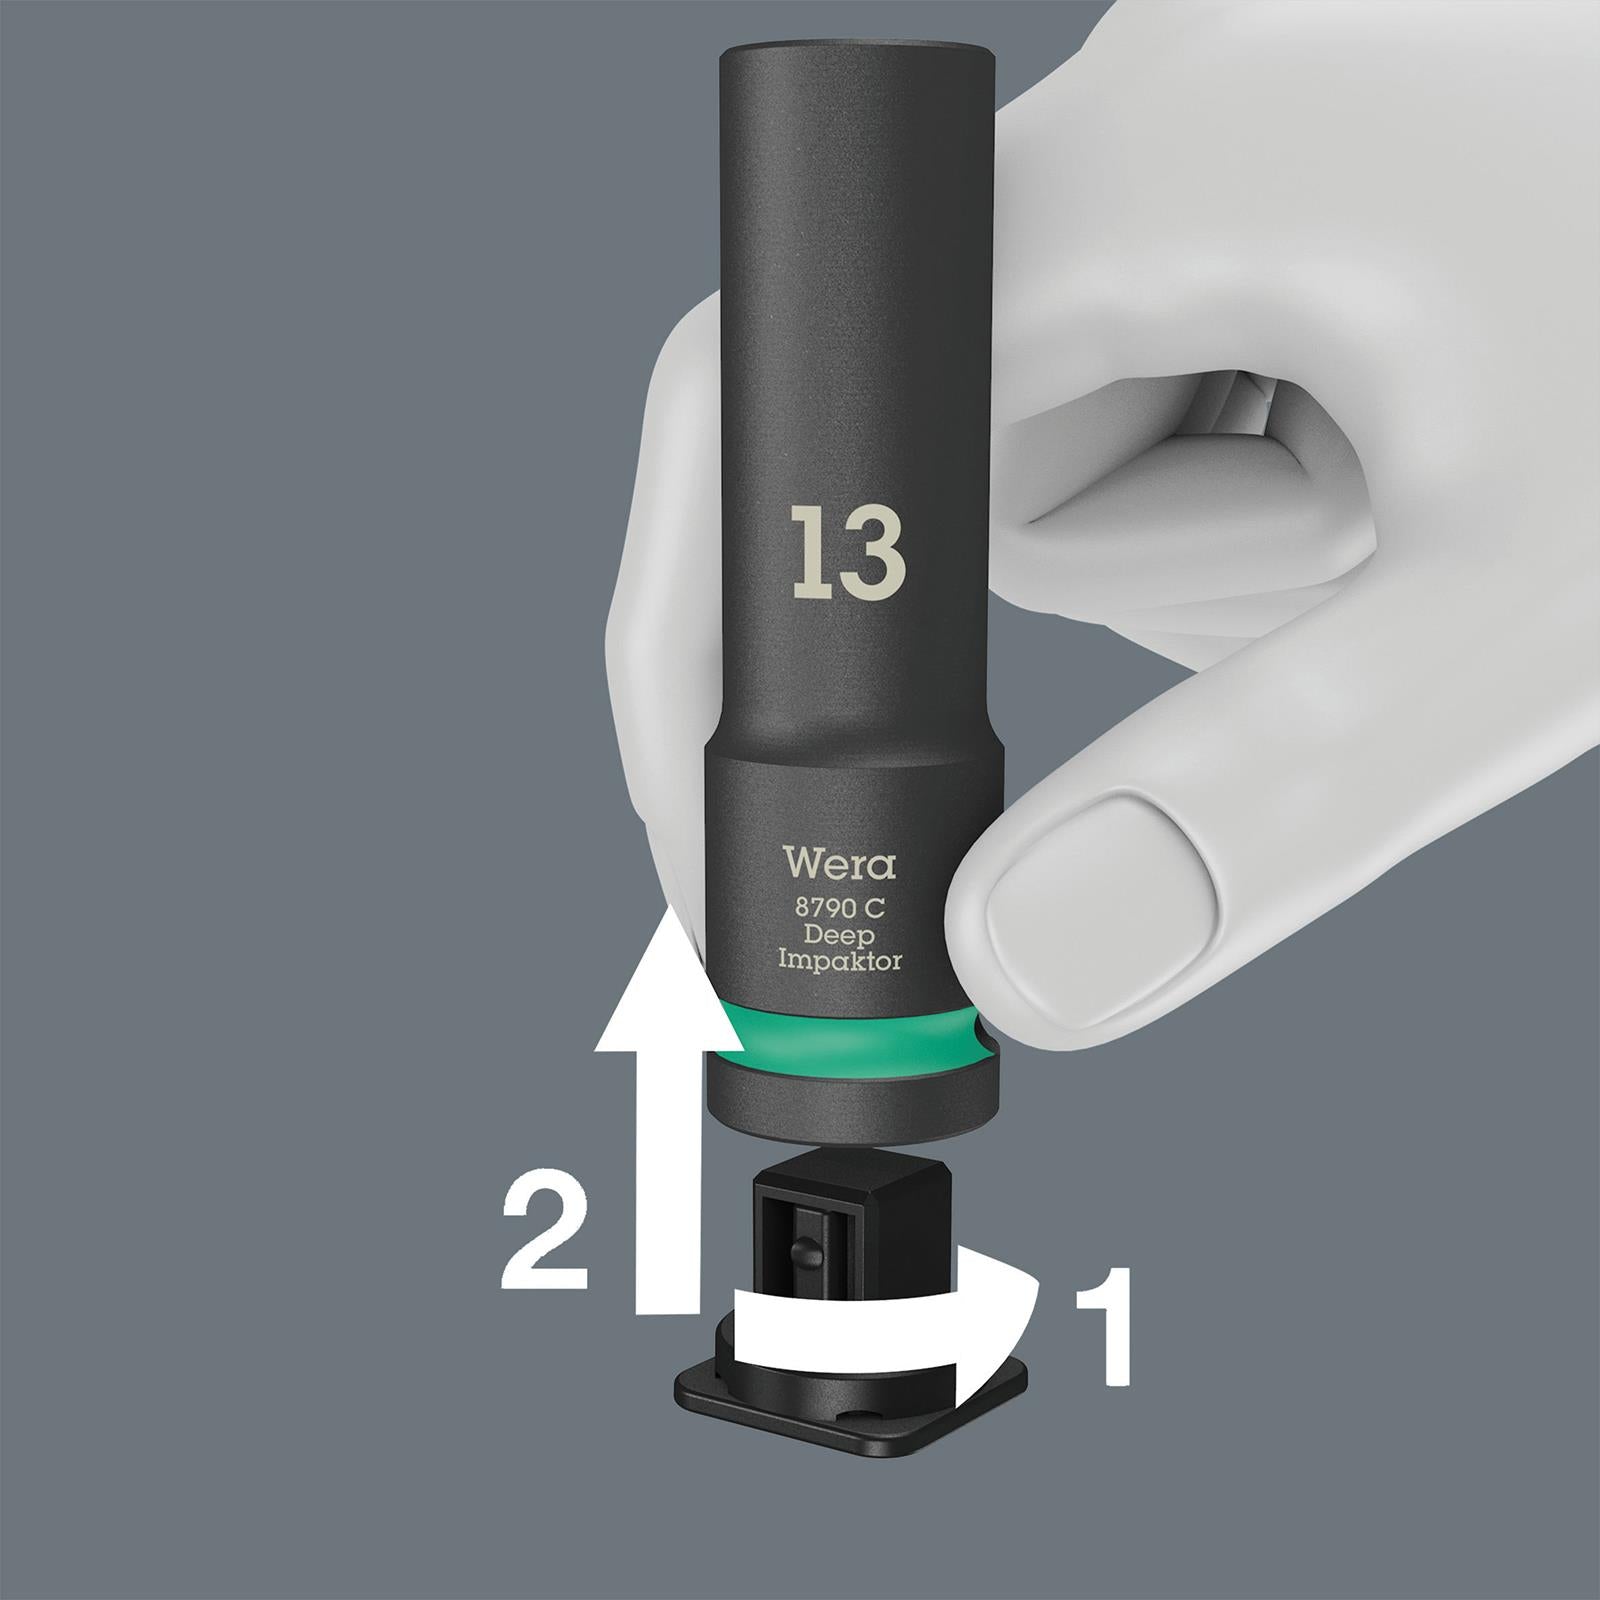 Wera Impact Socket Set Deep Impaktor 1/2" Drive in Case 8790 C Set 1 11 Pieces 13-27mm